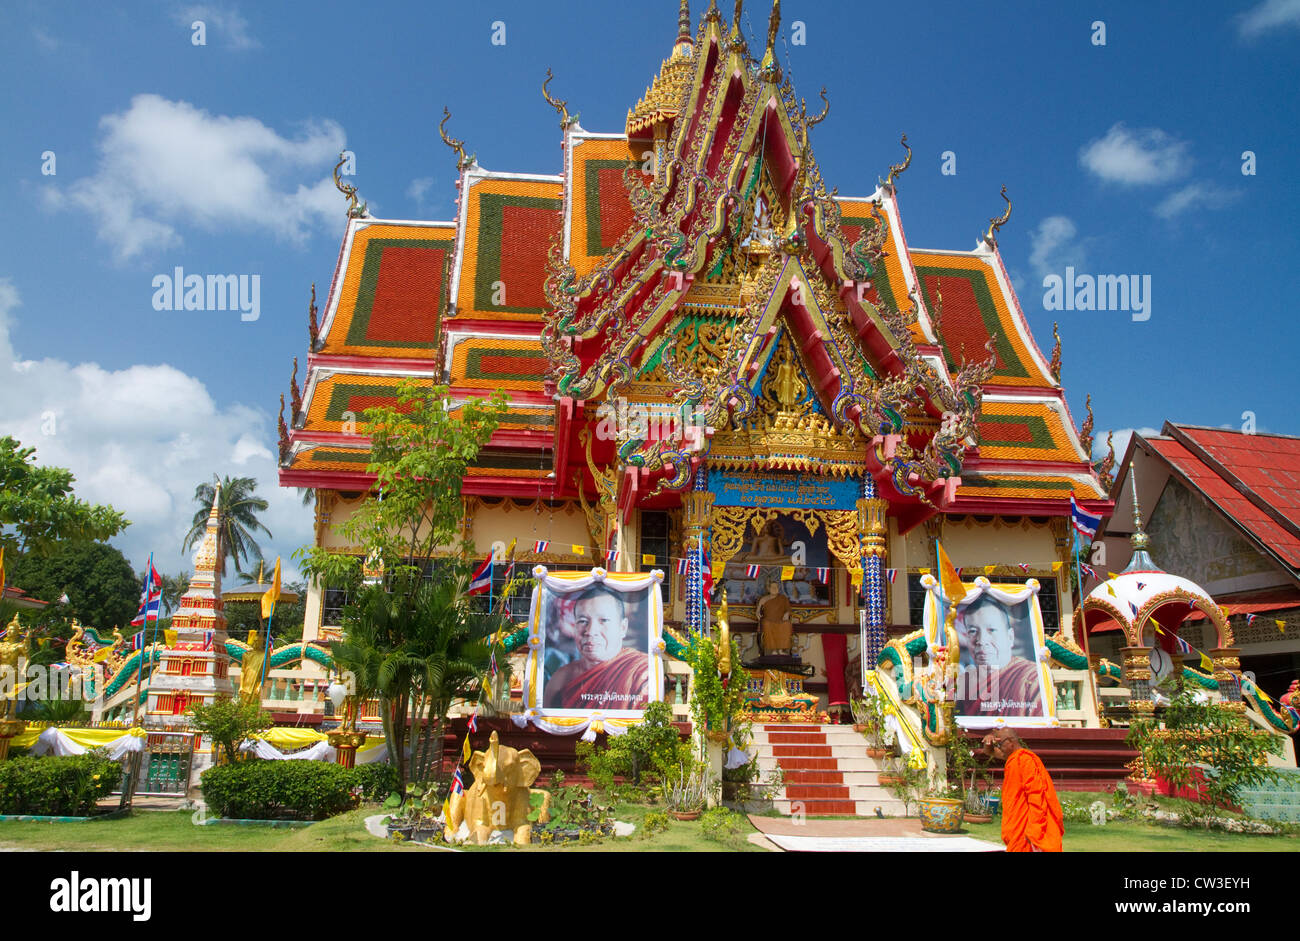 Wat Plai Laem temple located on the island of Ko Samui, Thailand. Stock Photo